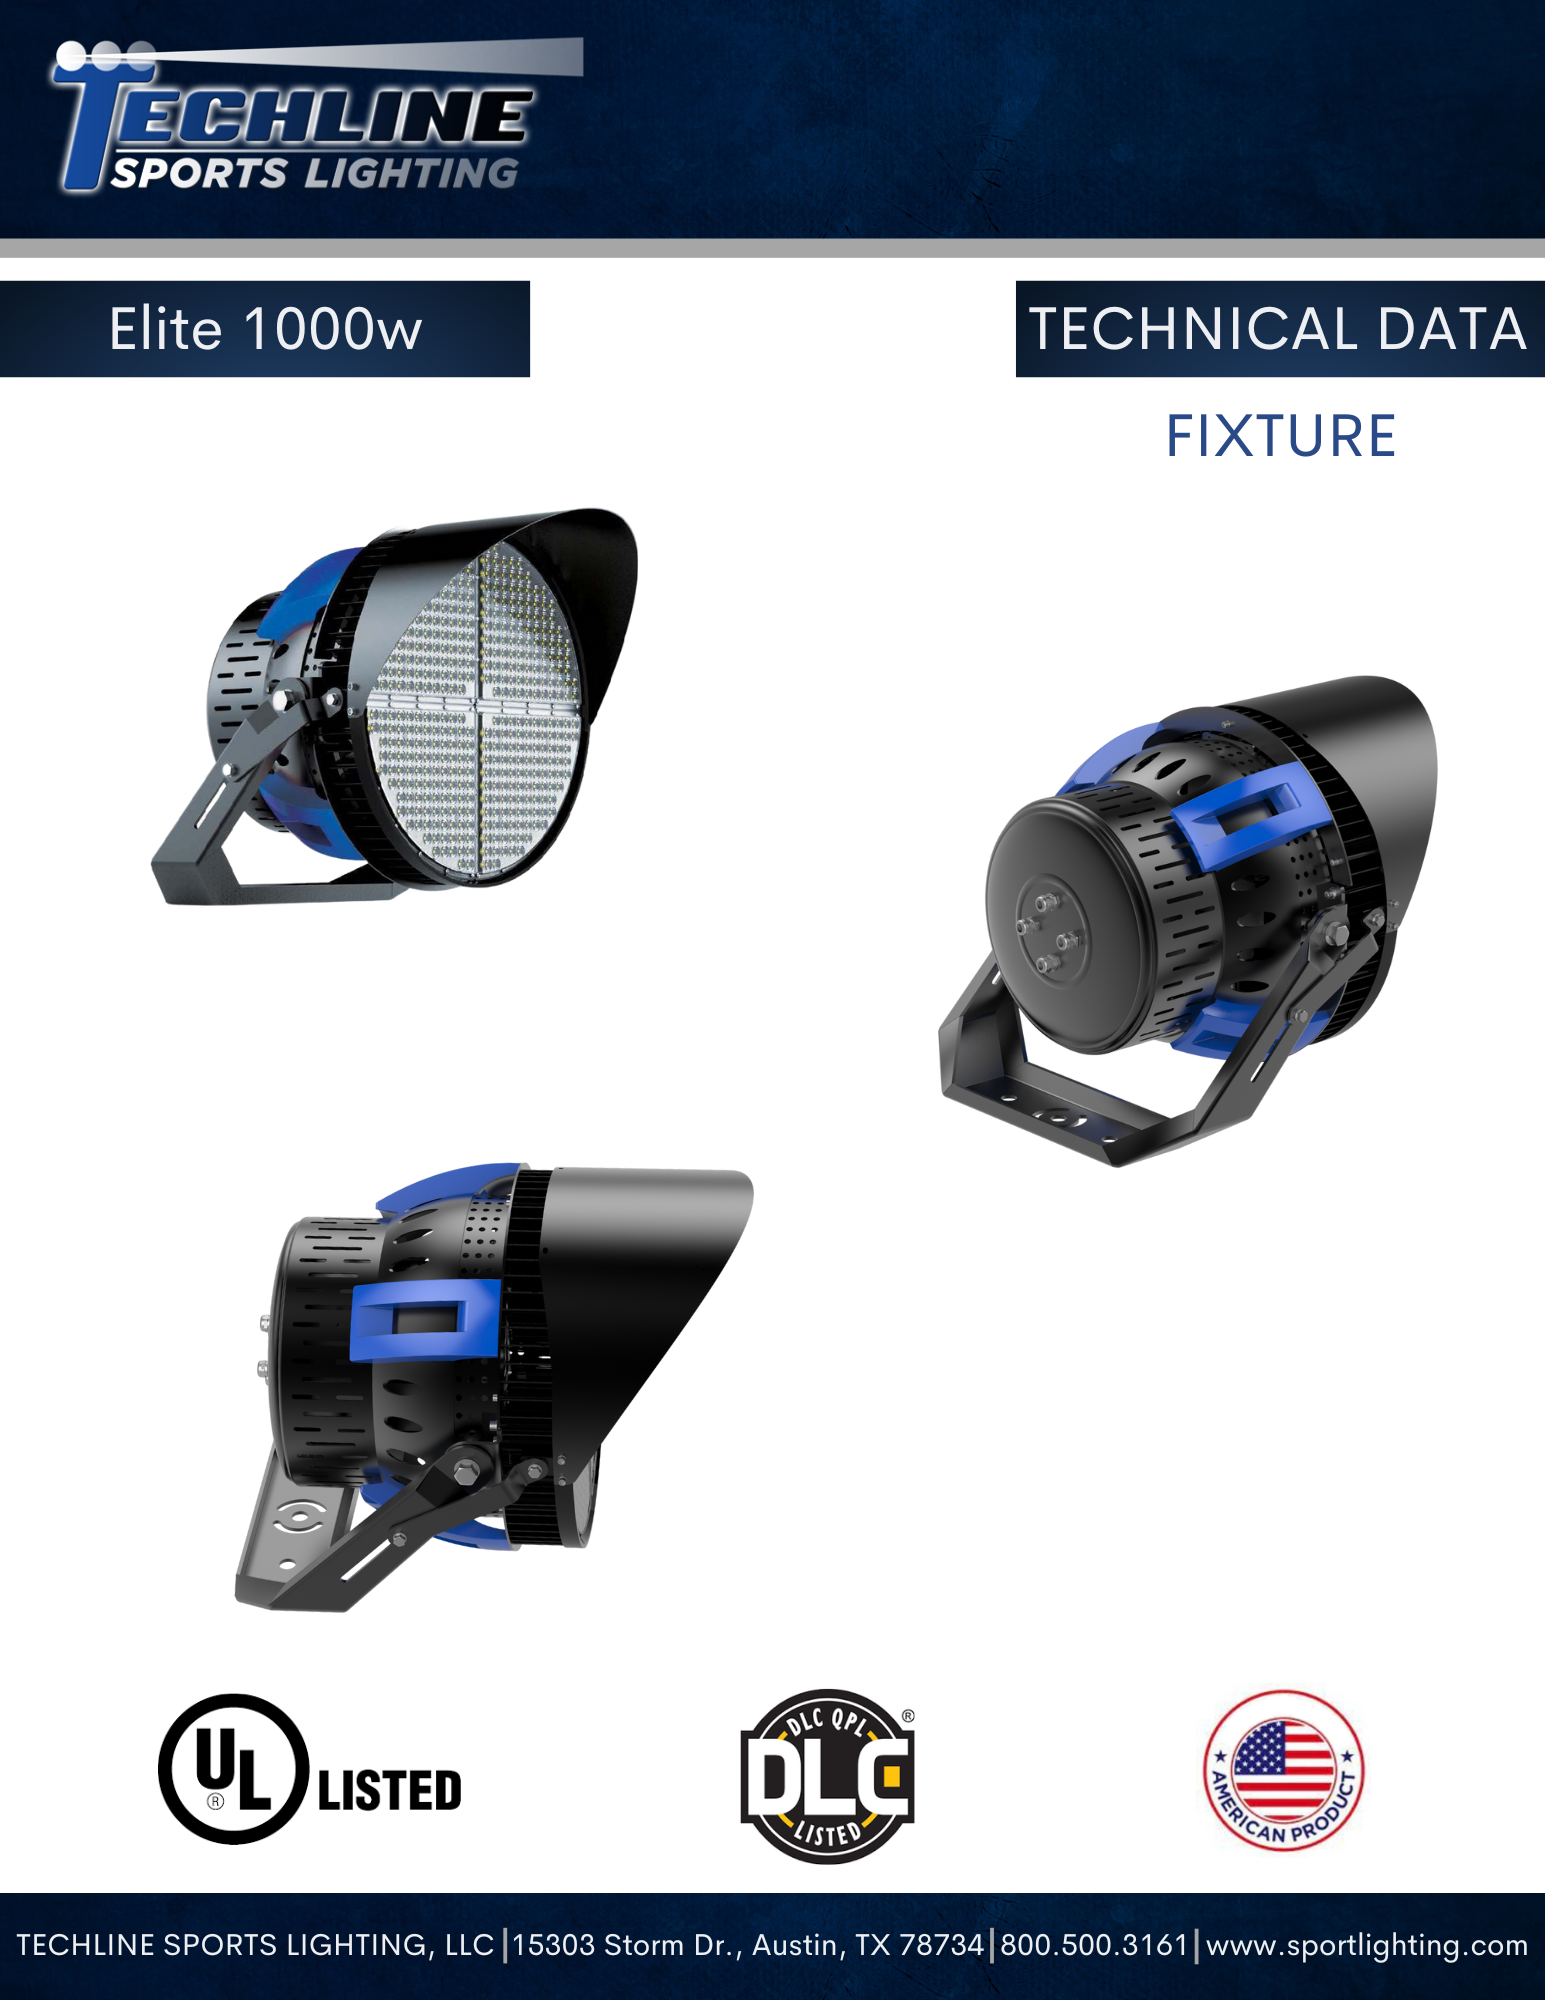 Elite 1000w Technical Data